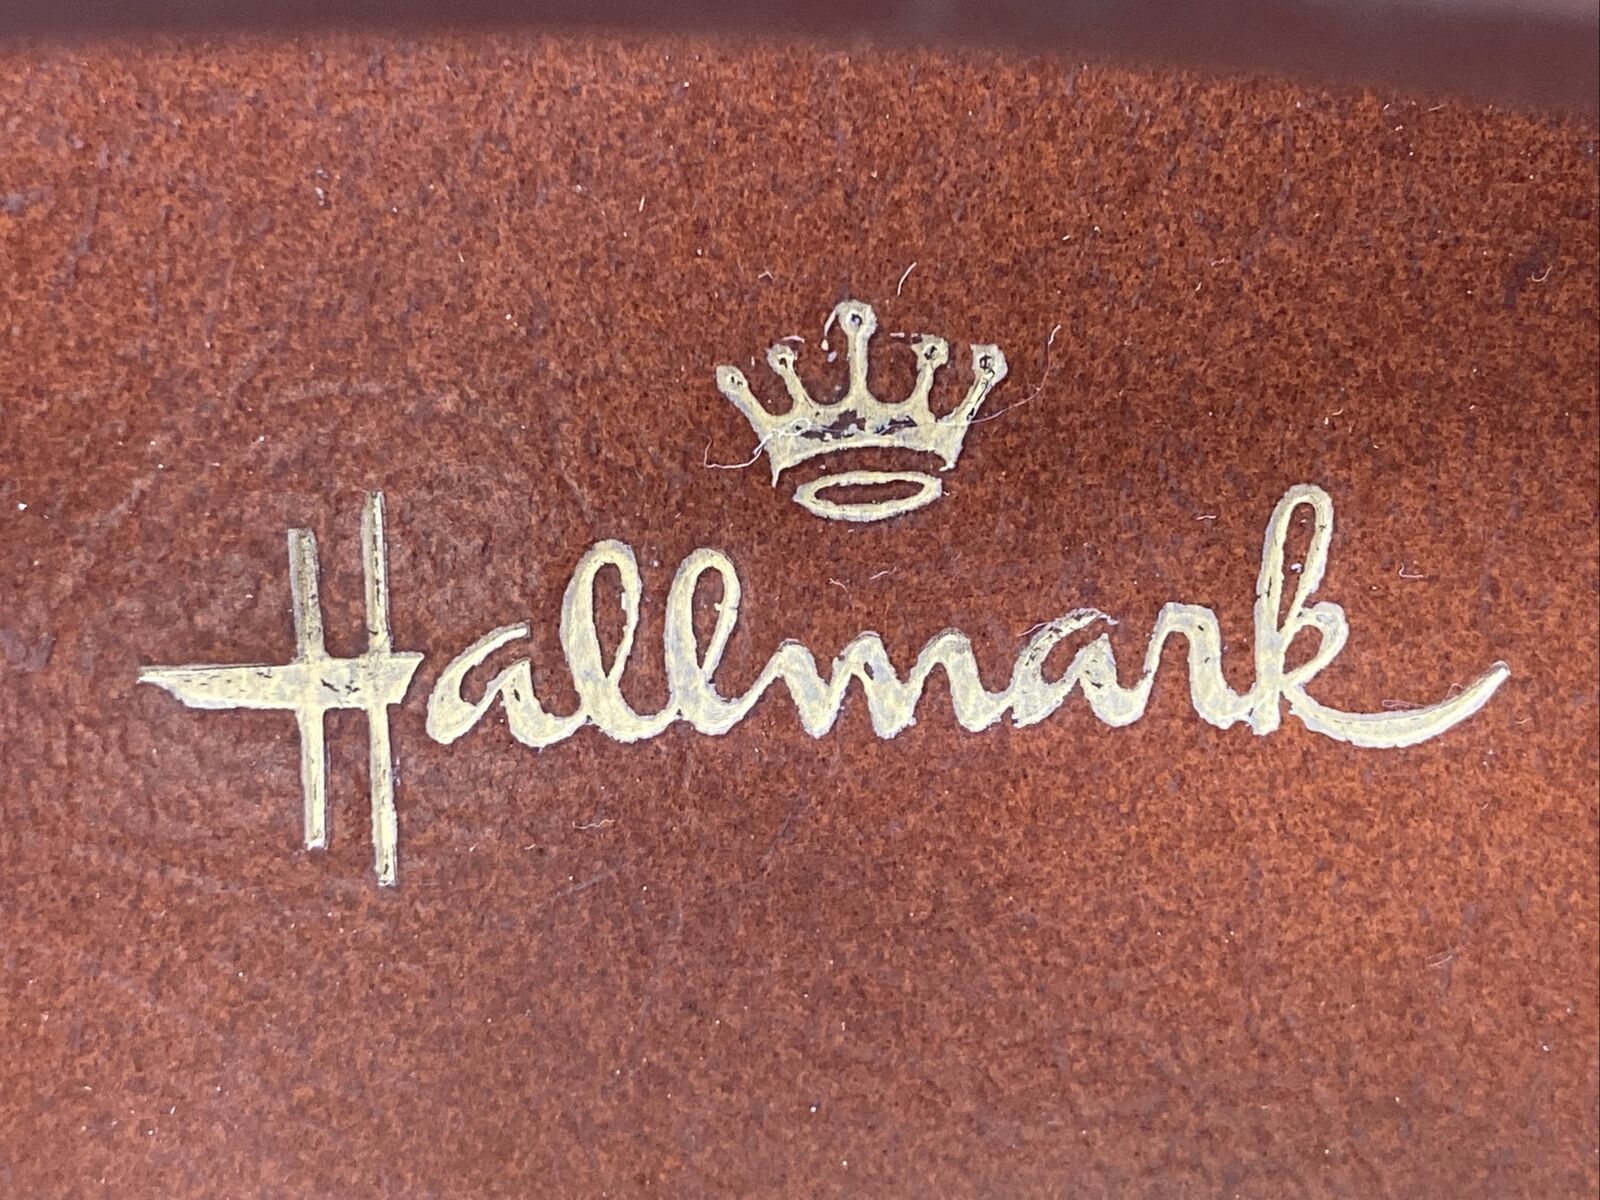 Hallmark Corporate Brief Case / Brown Leather / No Key / Stebco 21 D 126 16x10x5